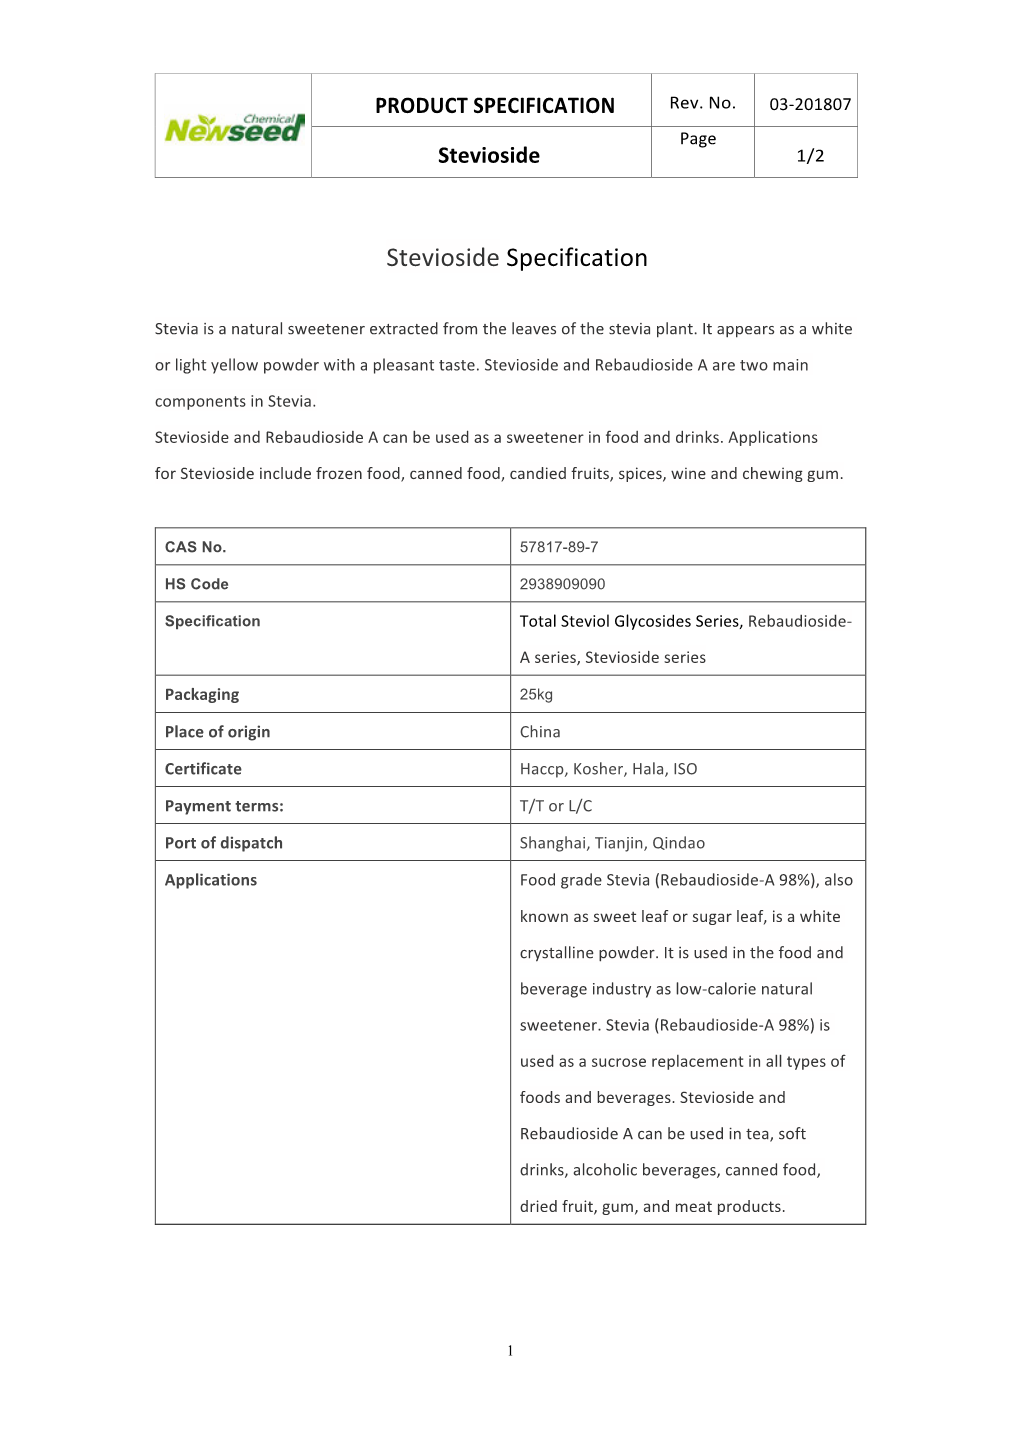 Stevioside Specification